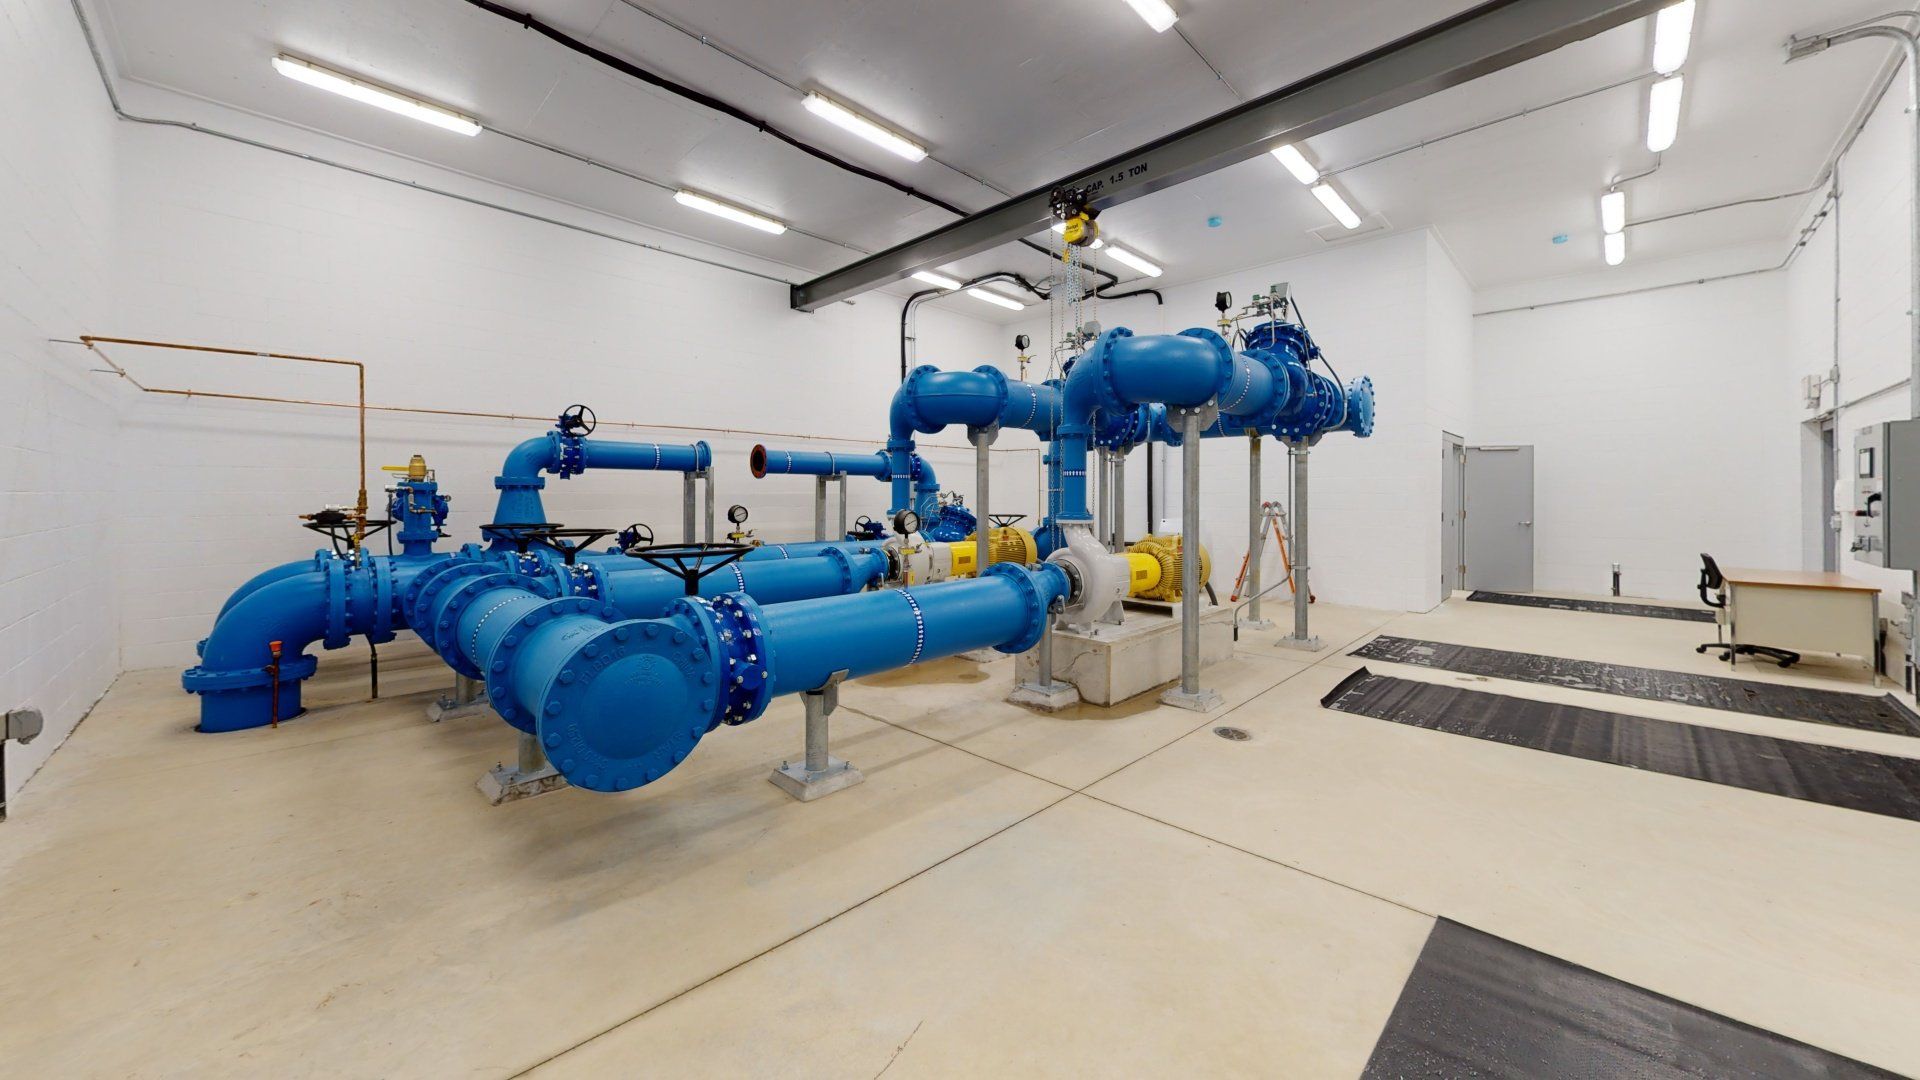 Derry Booster Pump Facility Interior